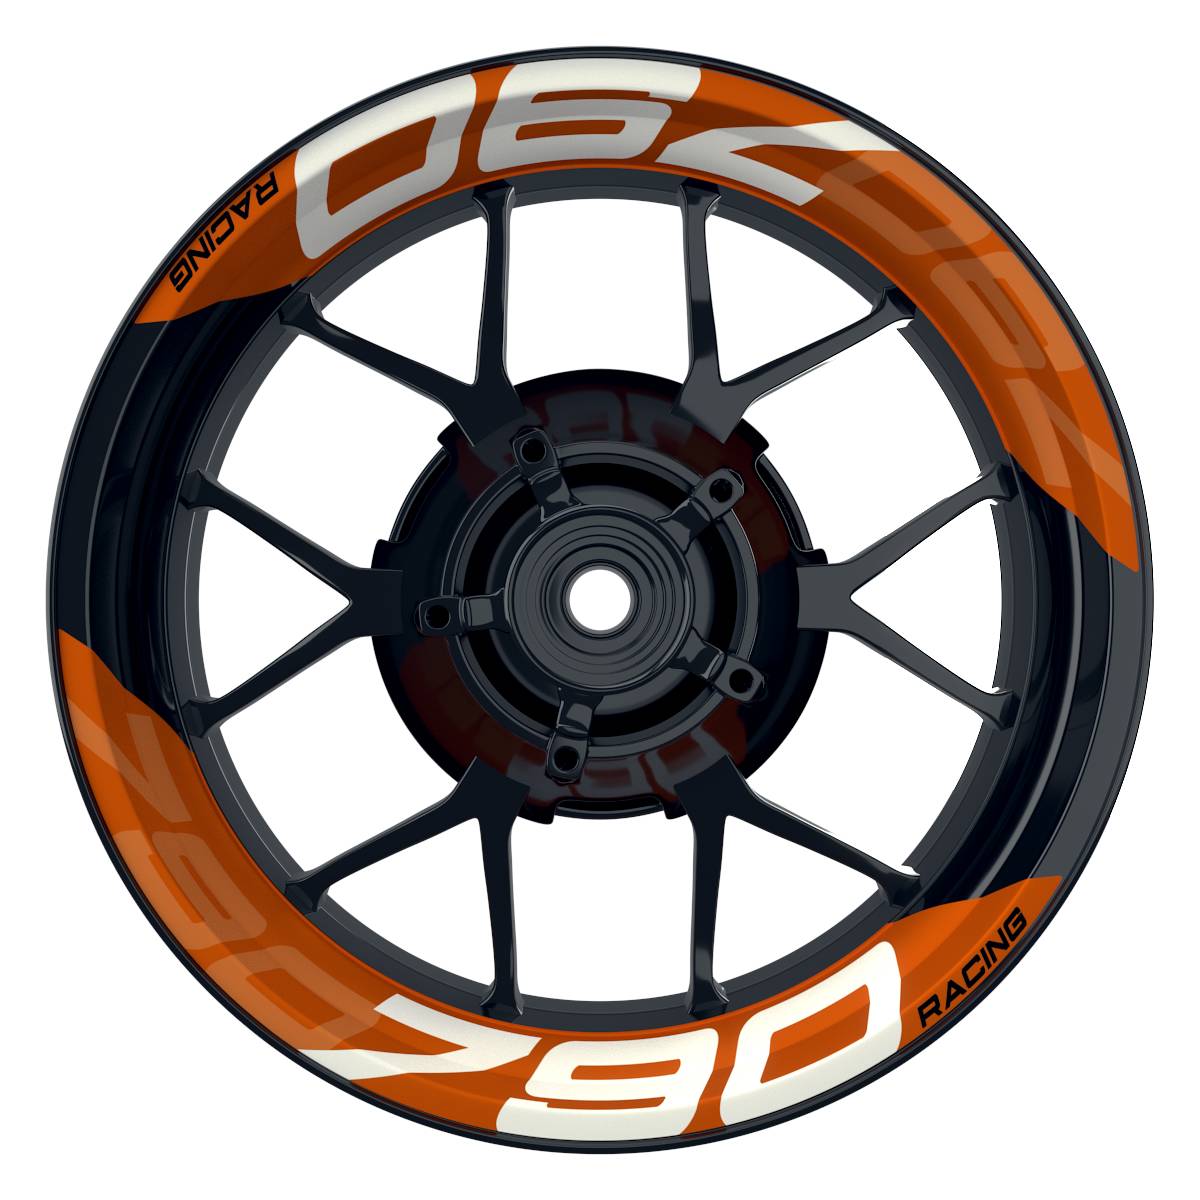 Wheelsticker Felgenaufkleber KTM Racing 790 einfarbig V2 orange Frontansicht